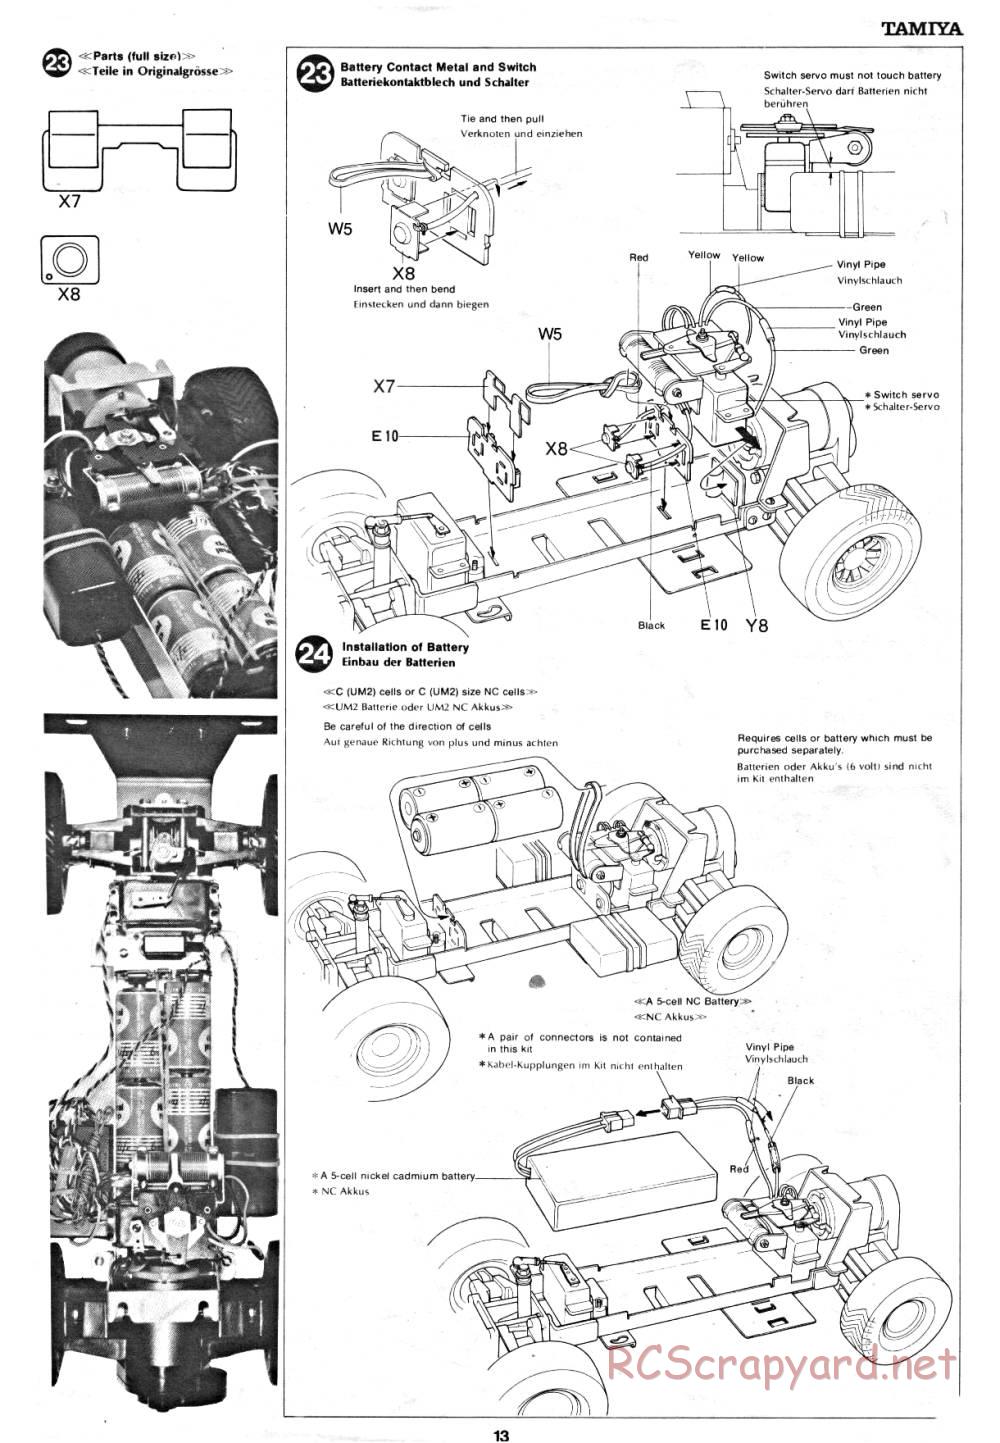 Tamiya - Lamborghini Cheetah - 58007 - Manual - Page 13